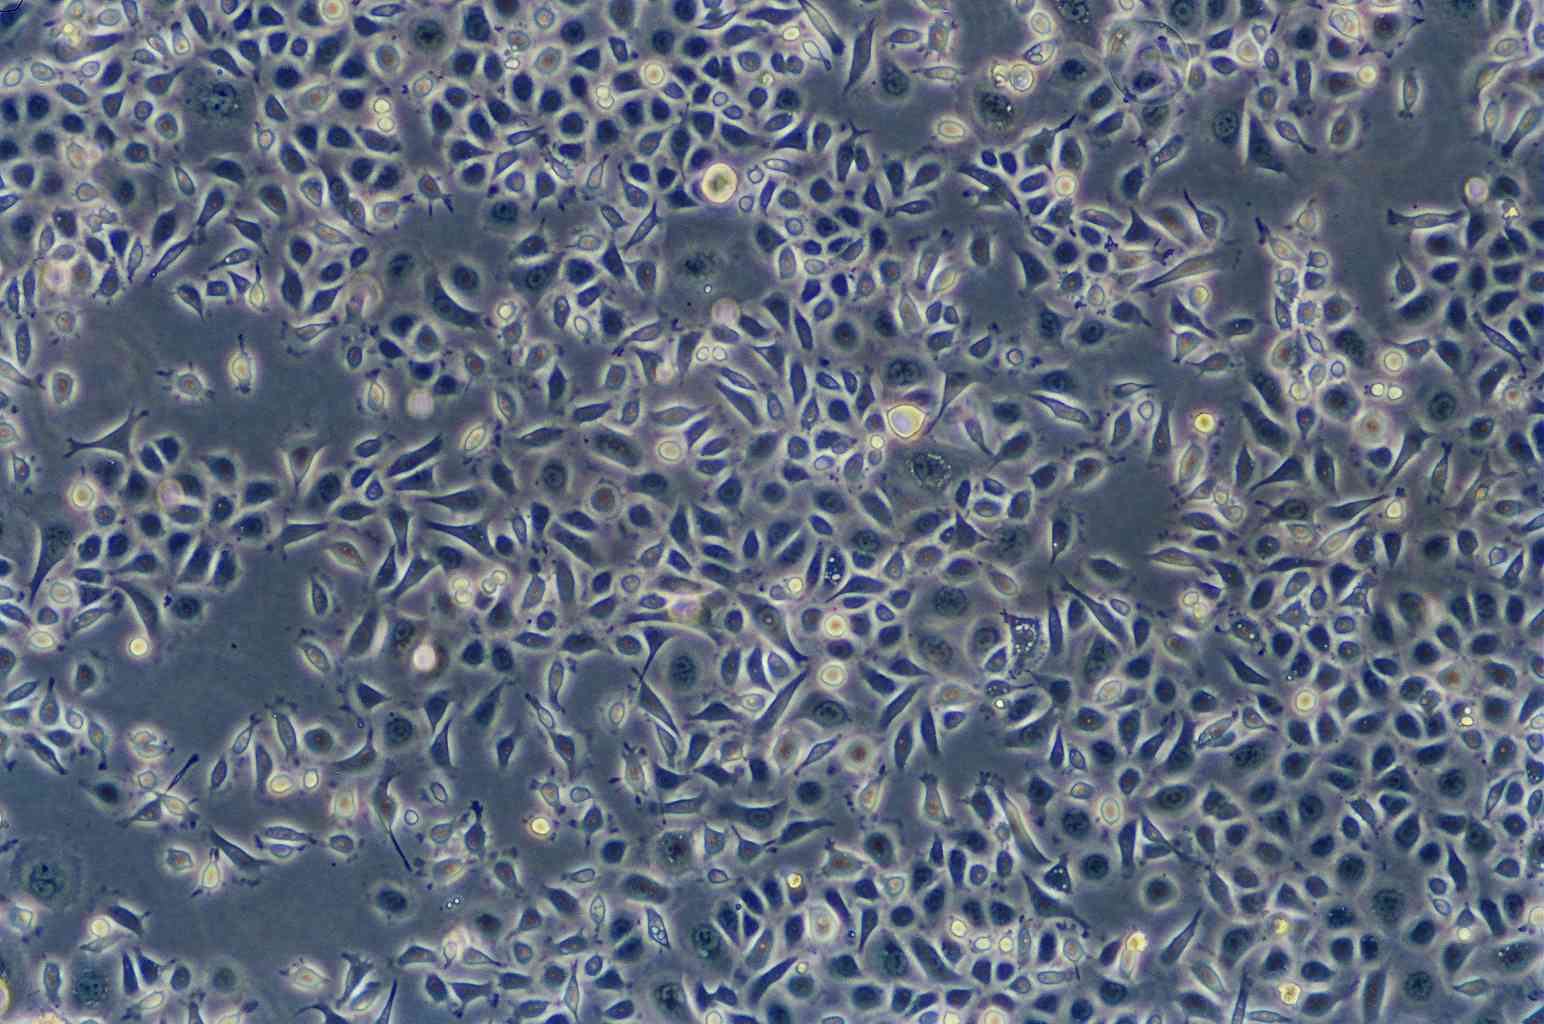 U-251MG cell line人神经胶质瘤细胞系,U-251MG cell line